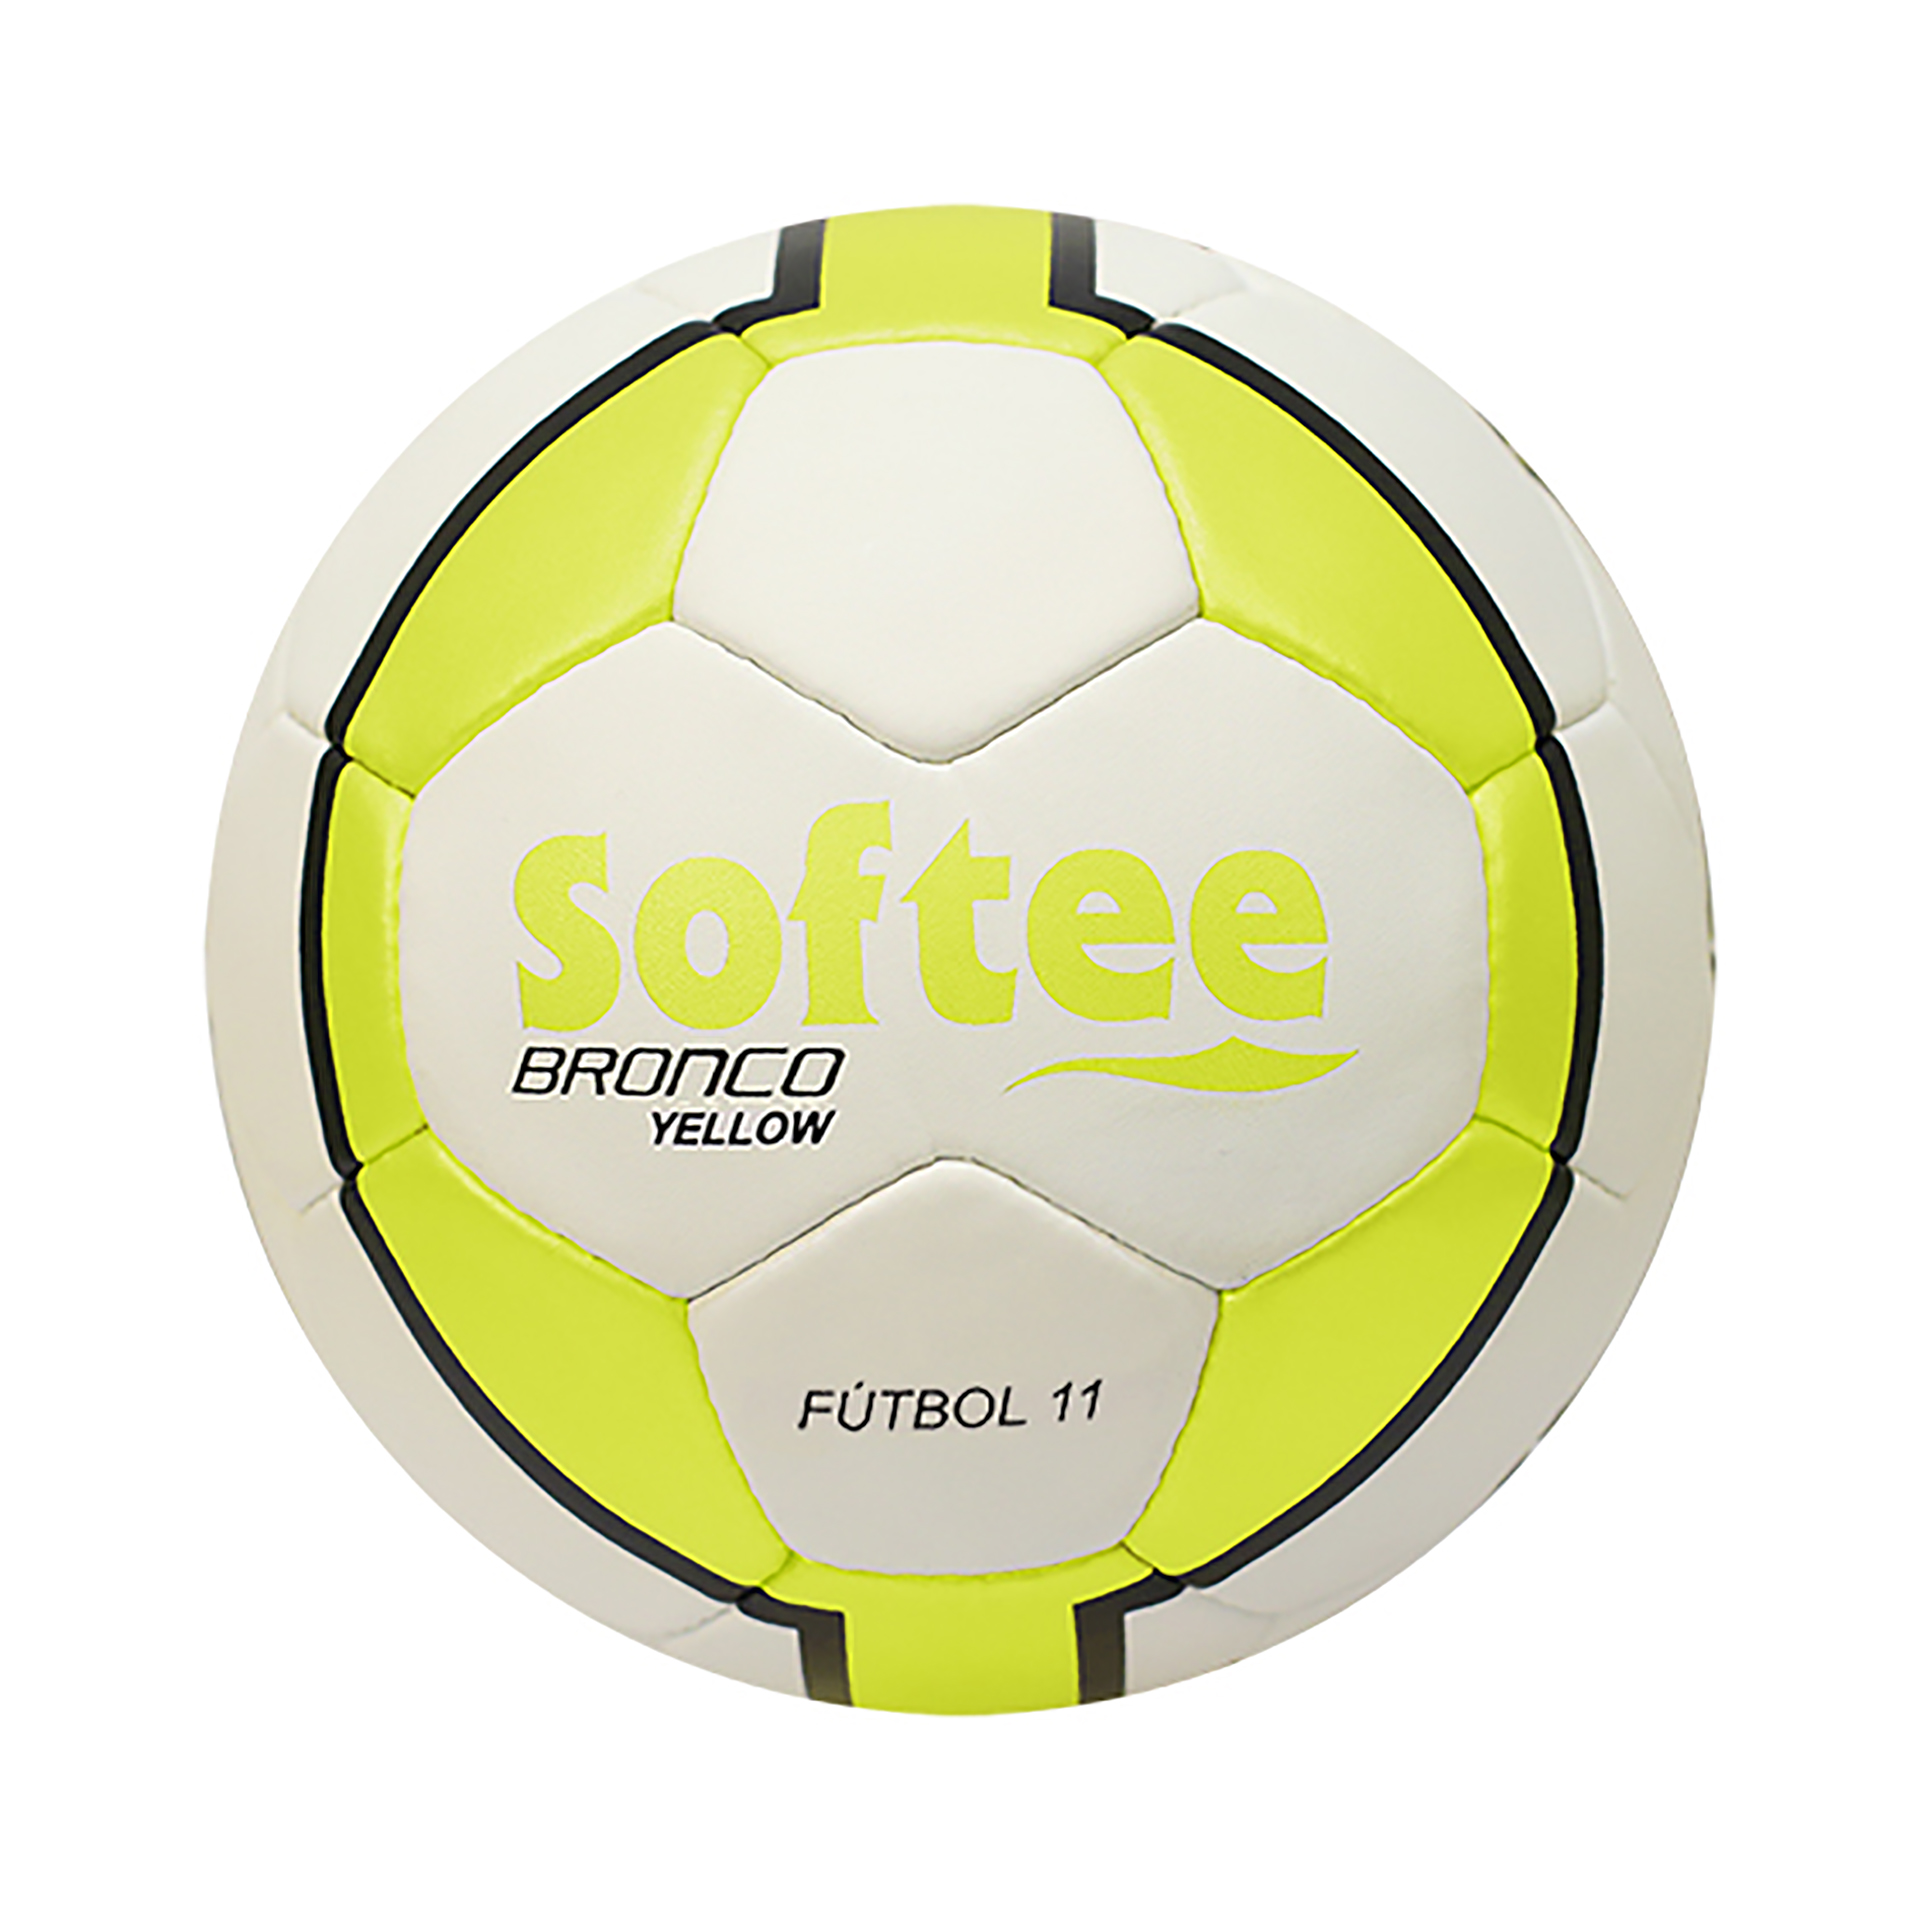 balón softee bronco limited edition amarillo flúor fútbol 11 1